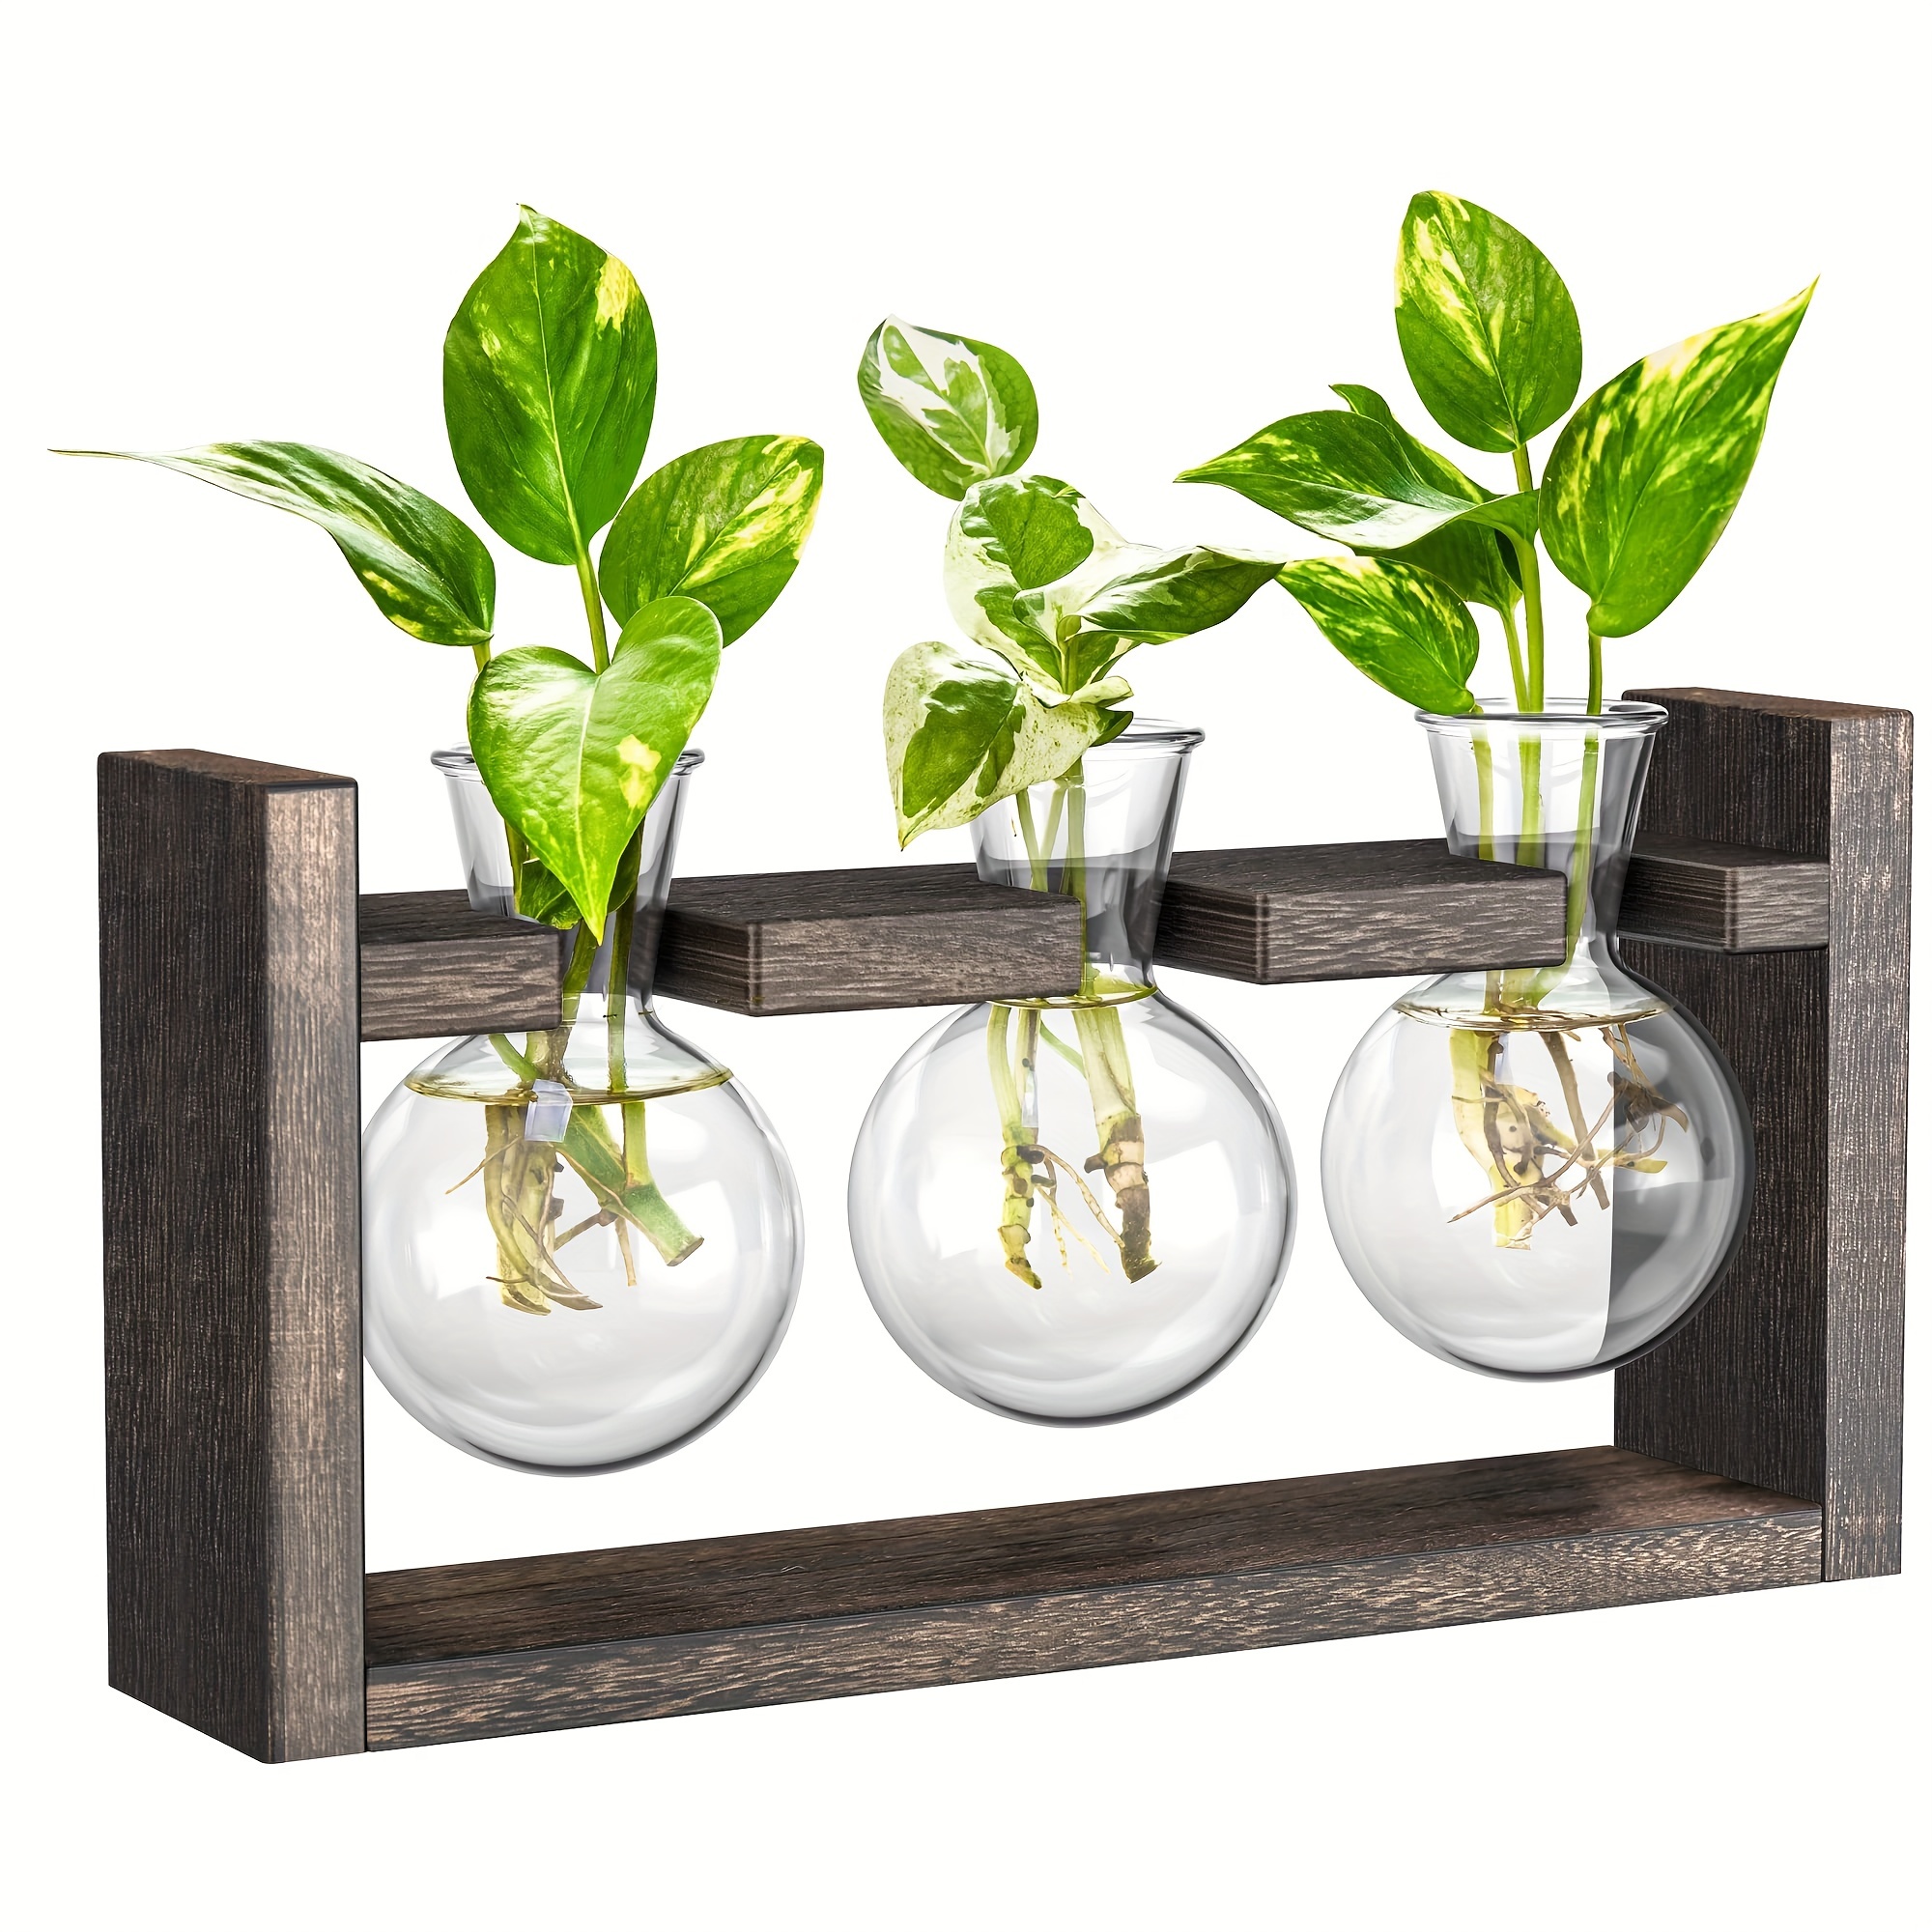 

1pc Plant Terrarium Tabletop Glass Bulb Propagation Station With Wooden Stand For Hydroponics Plants Desktop Home Garden Wedding Decor